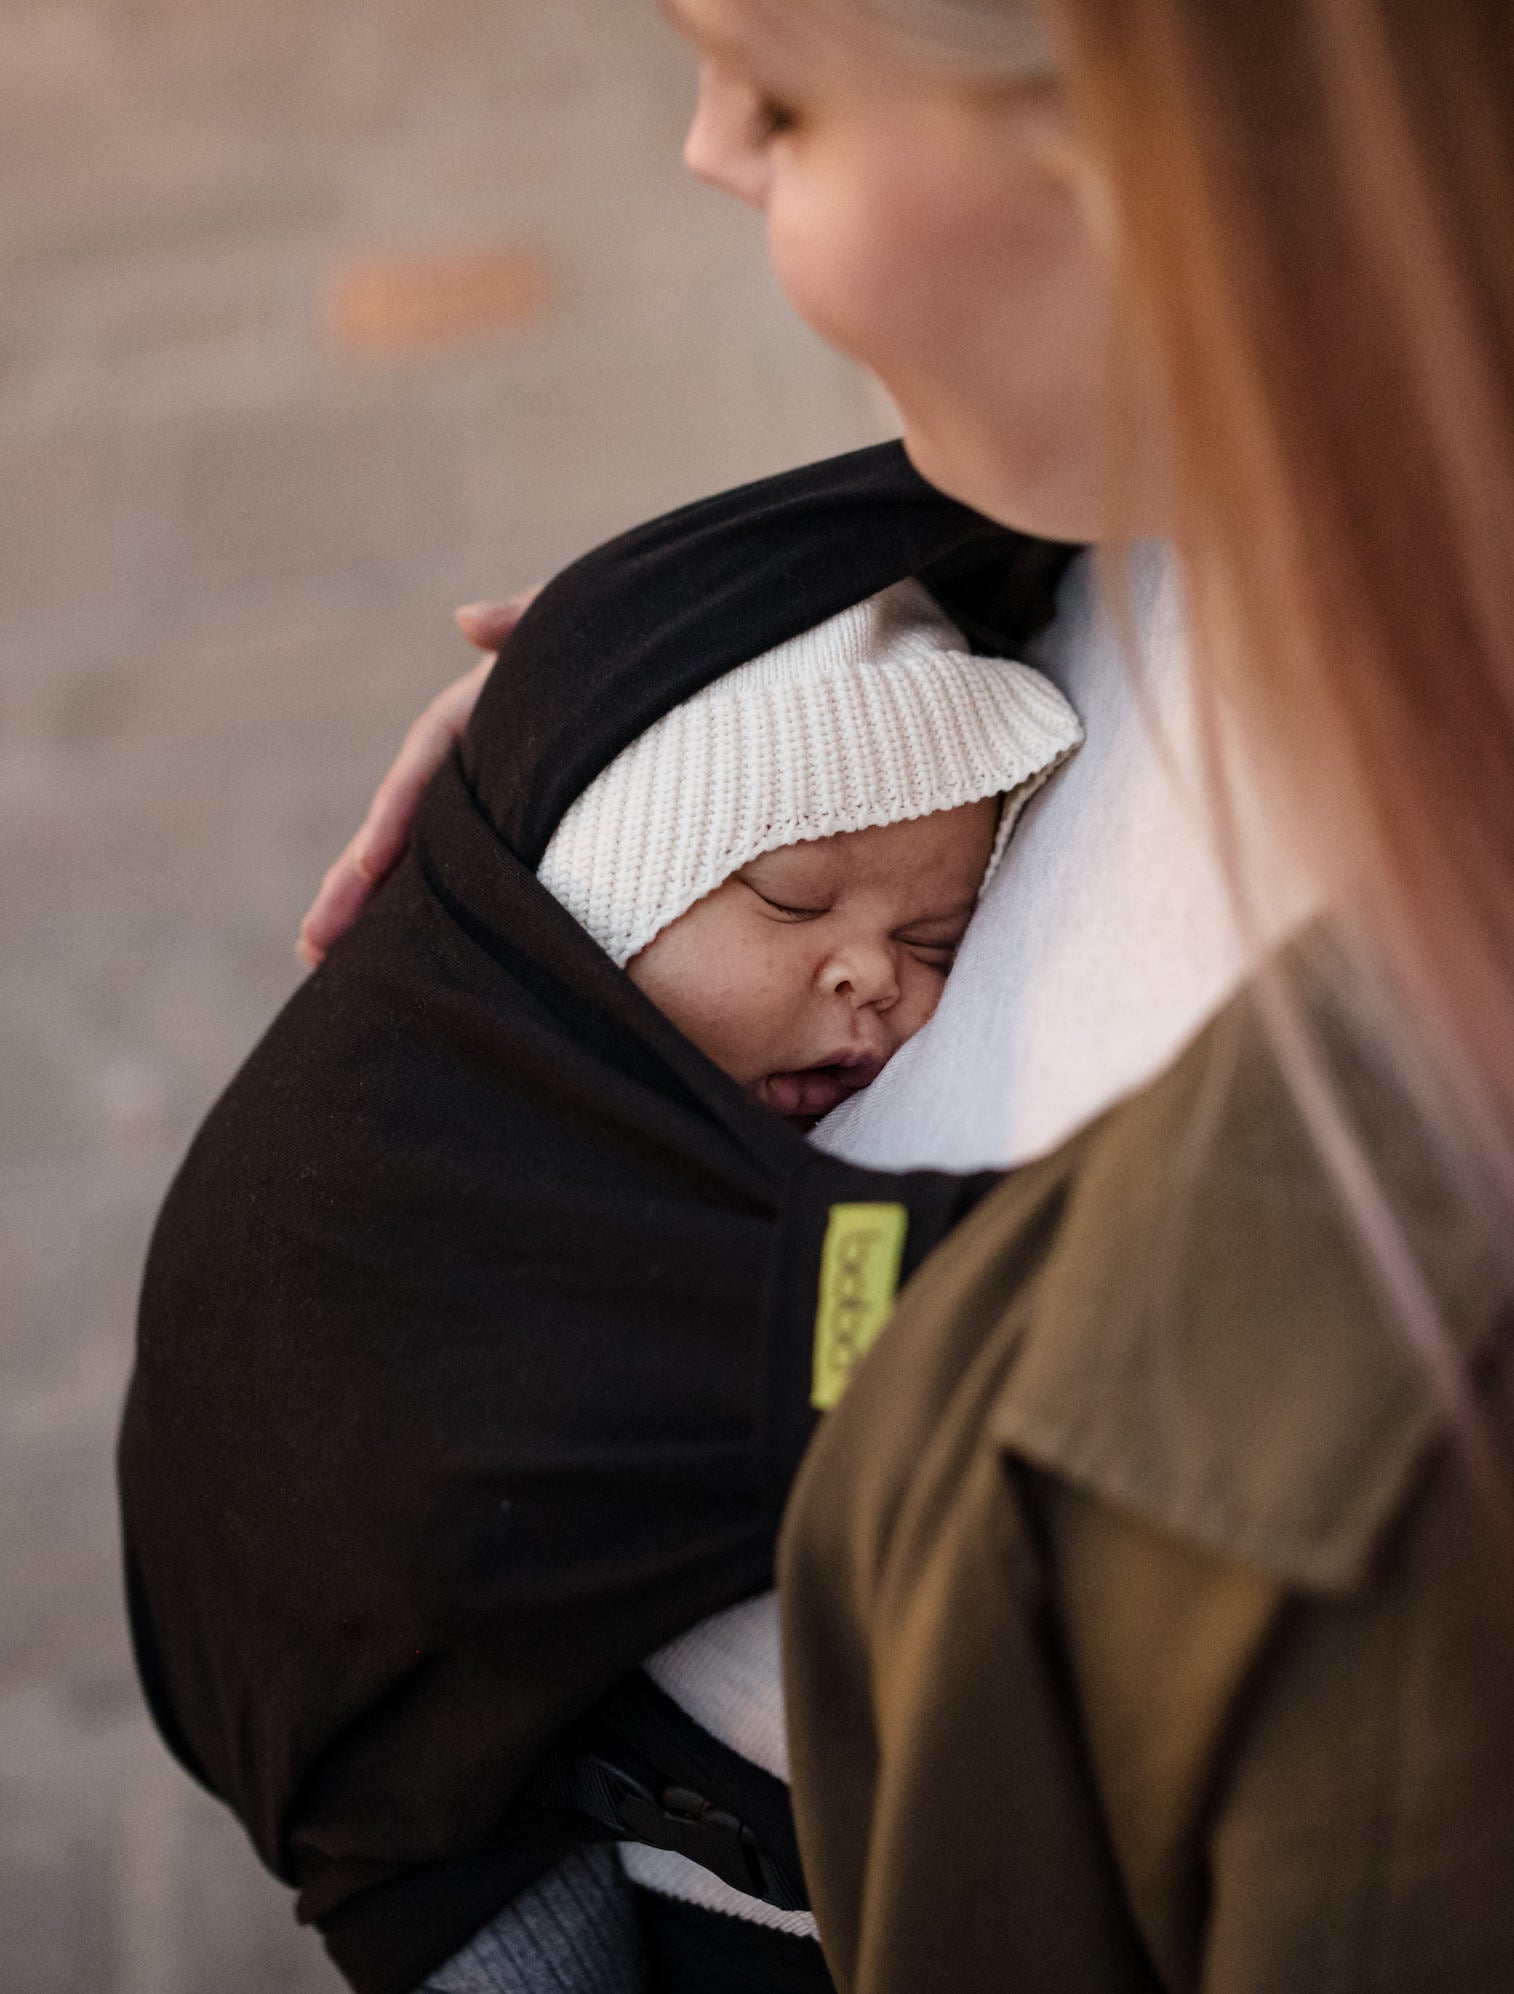  Boba Bliss Hybrid Baby Carrier Newborn to Toddler - 2